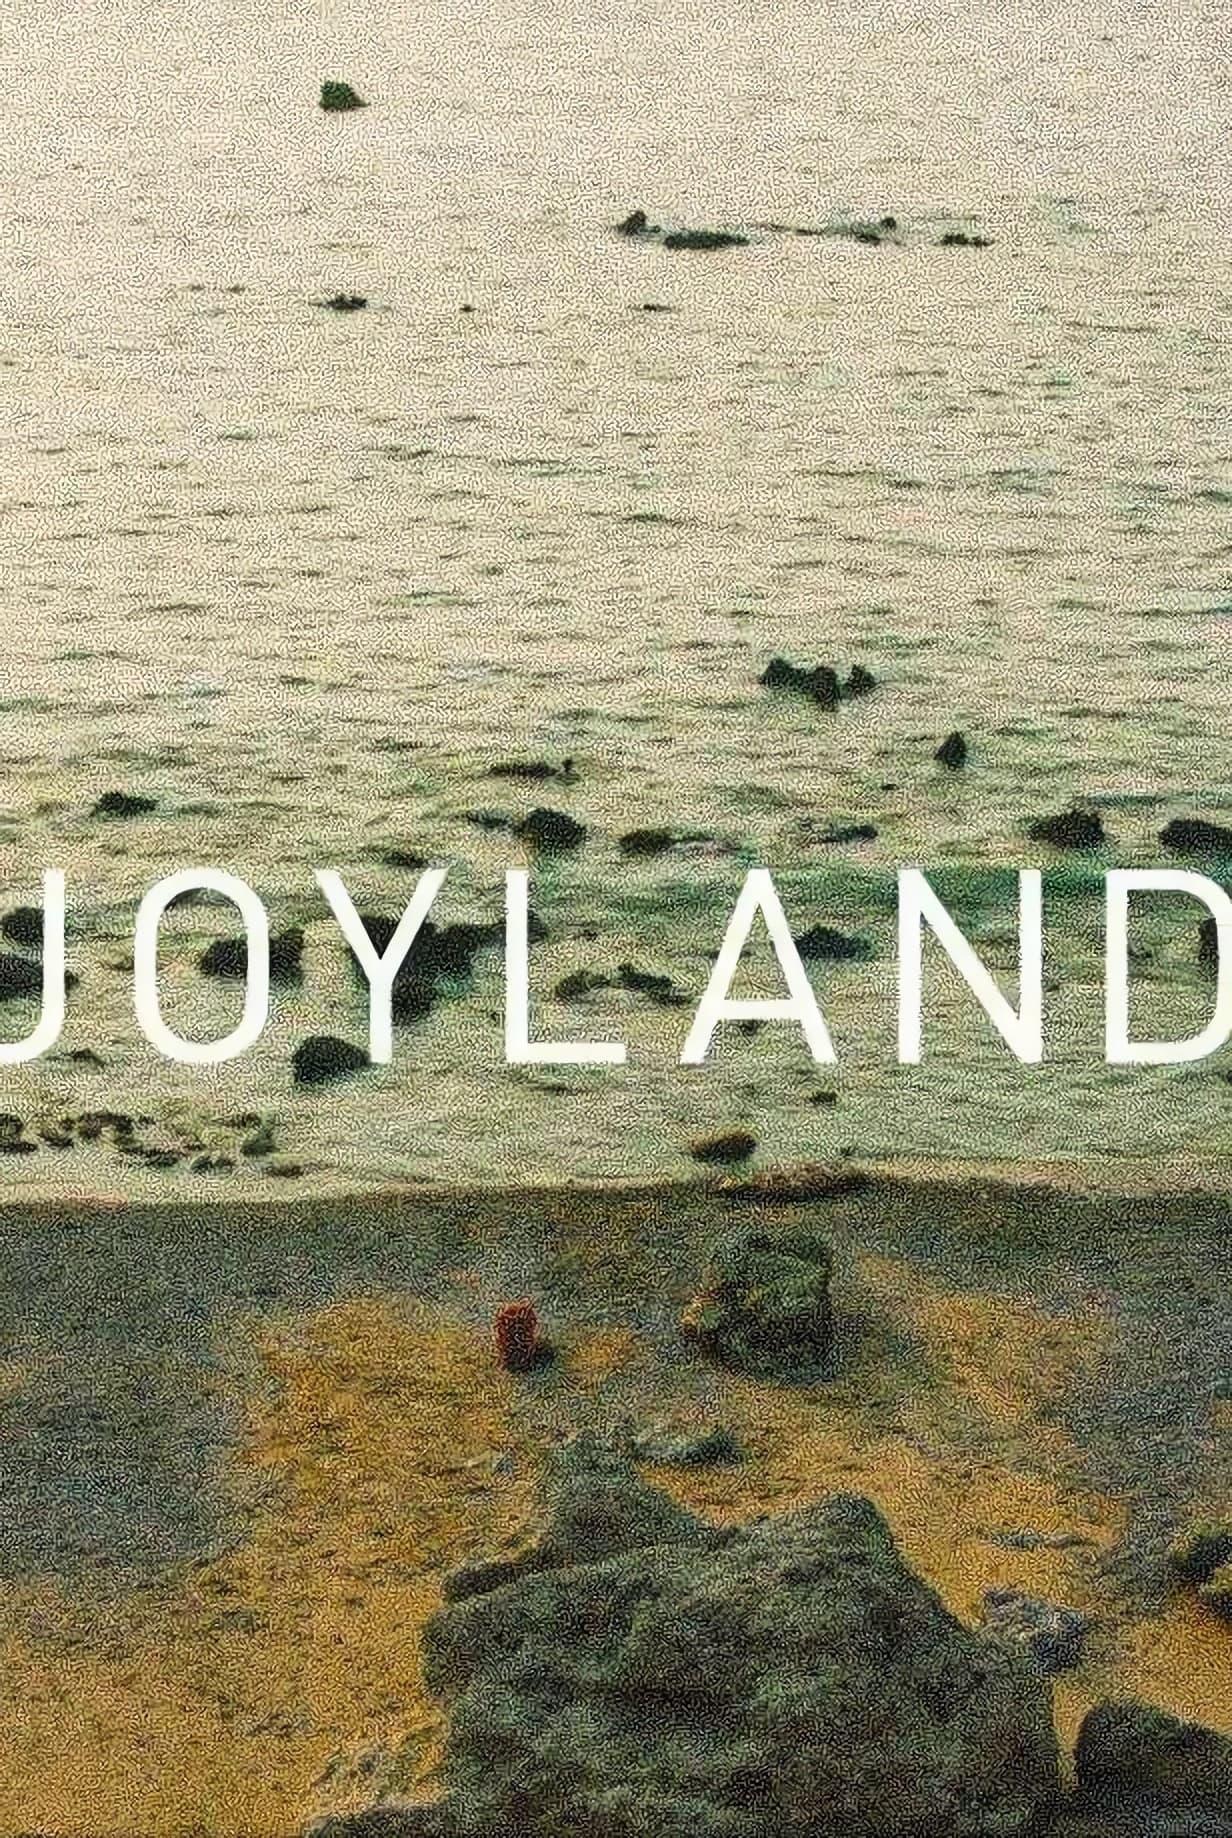 Joyland poster